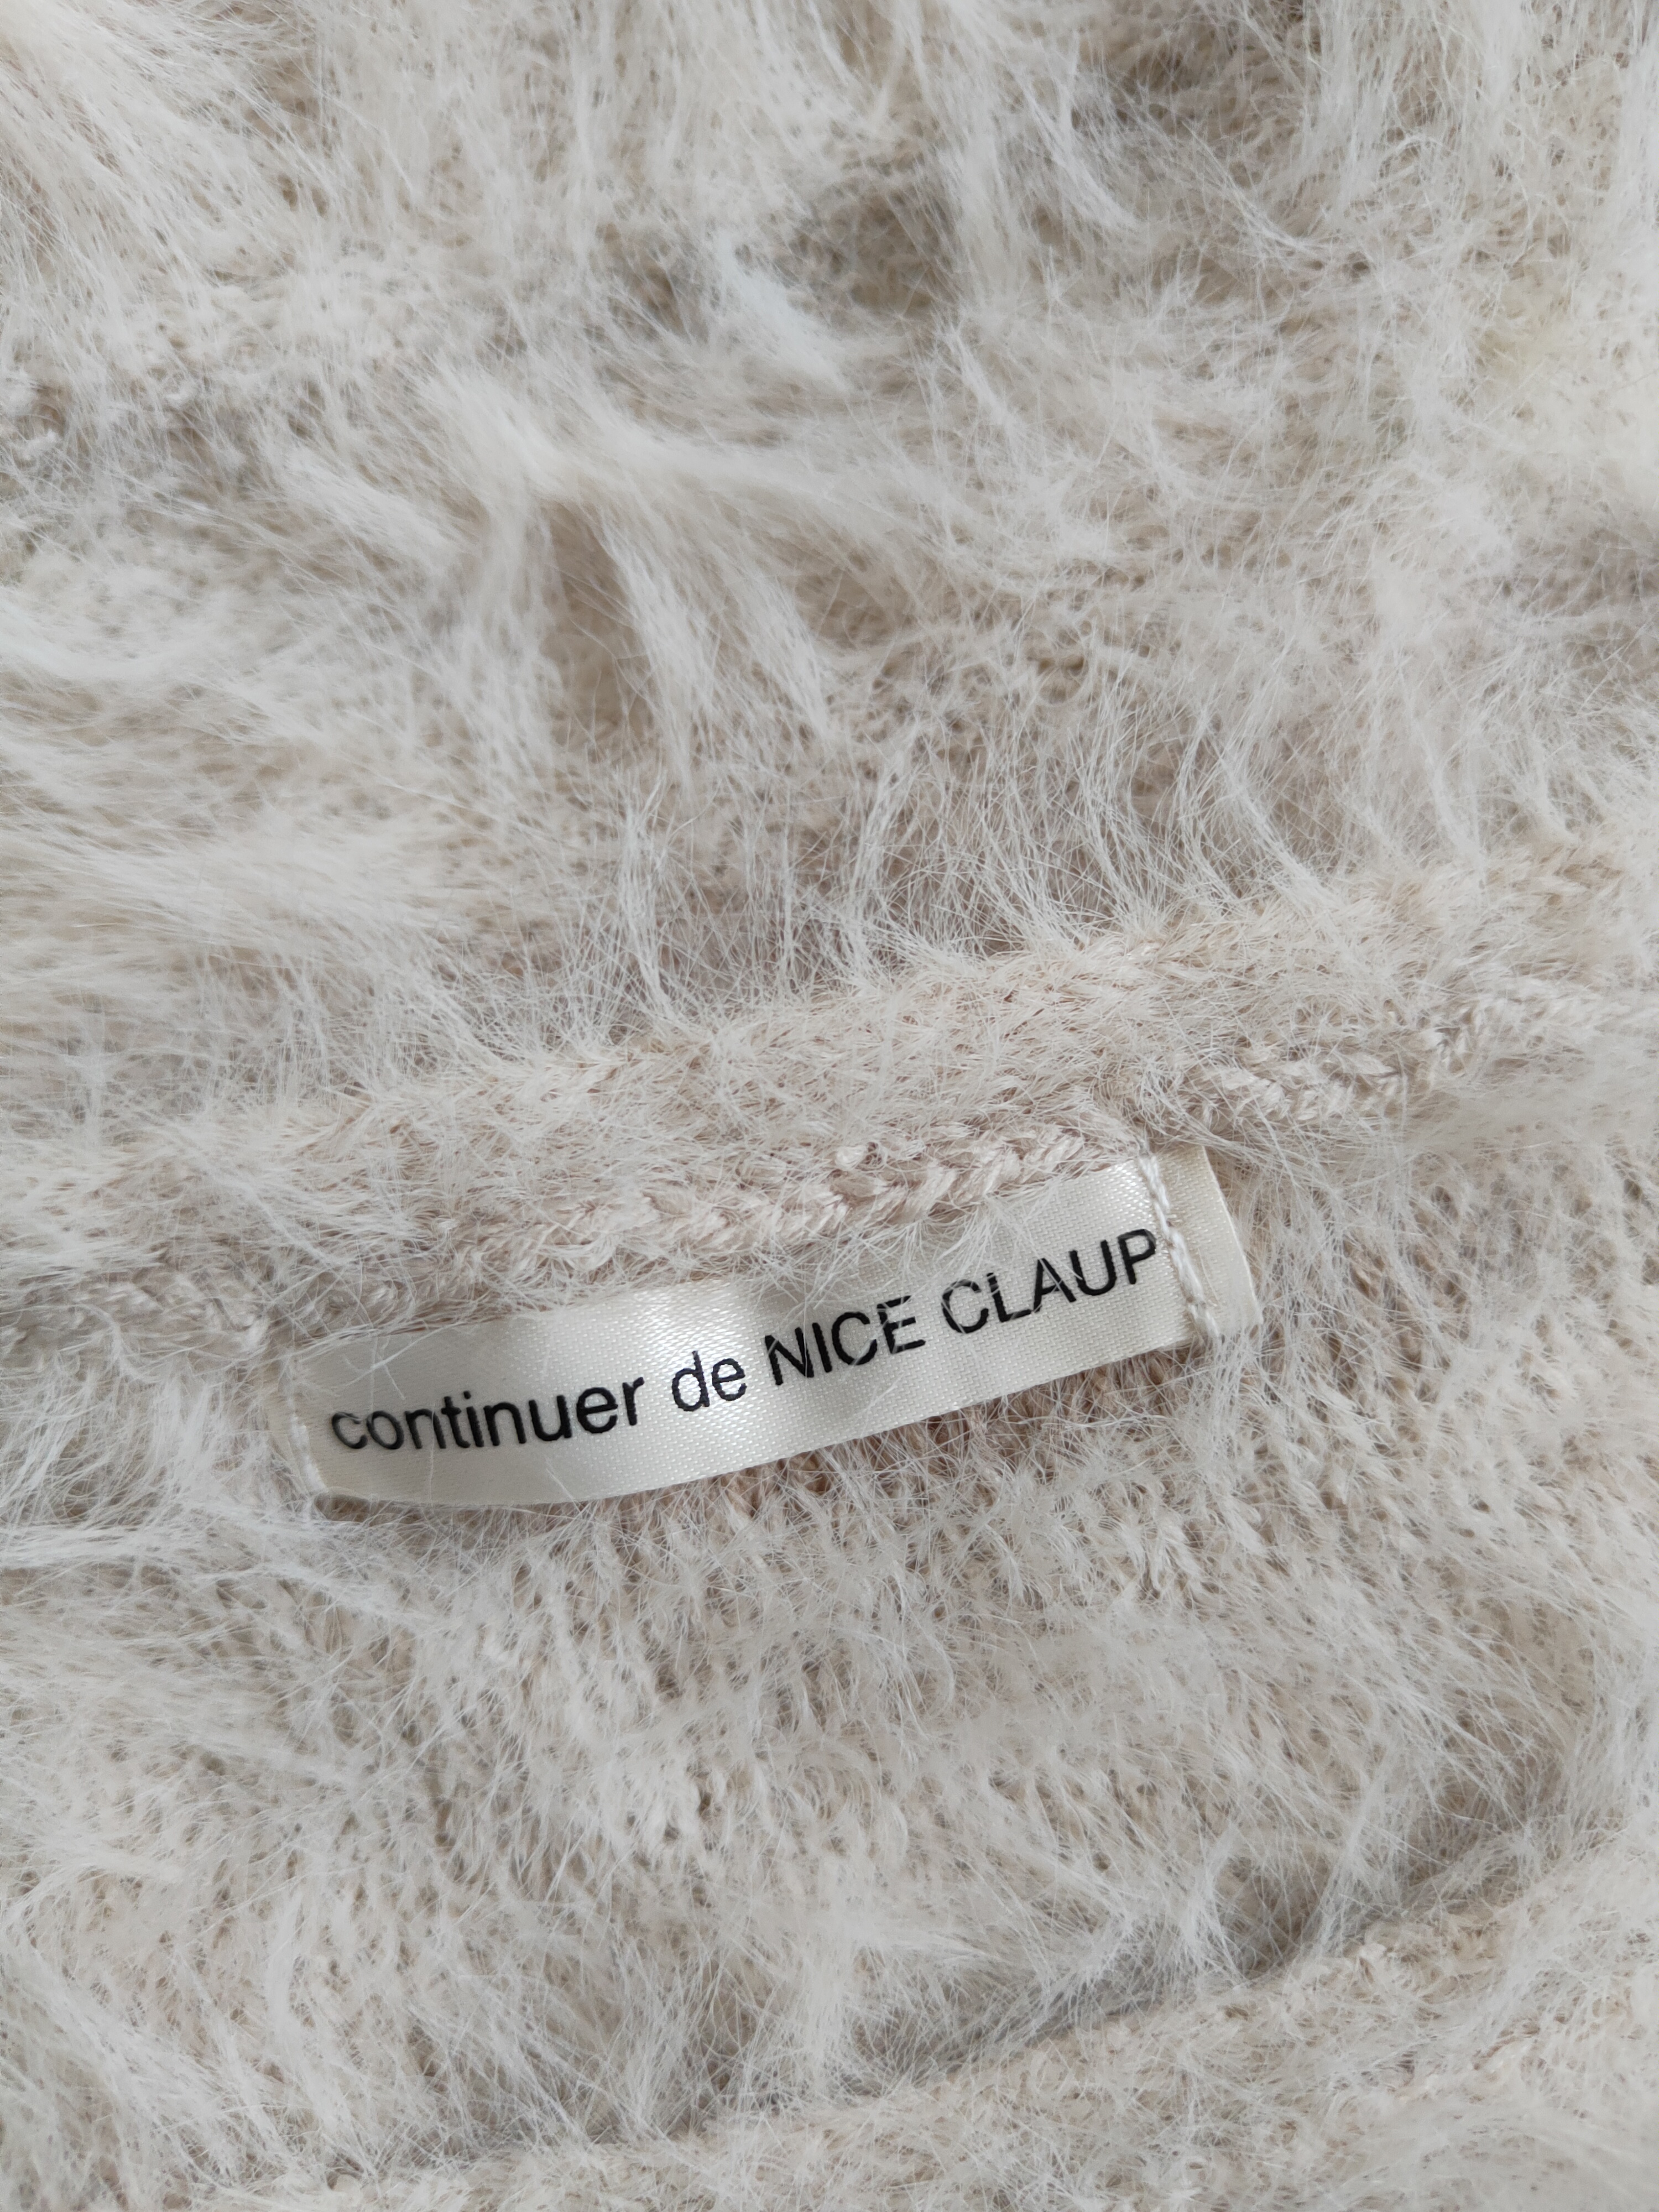 Japanese Brand - Continuer de Nice Claup Shaggy Fur Mohair Knitwear #S795 - 12